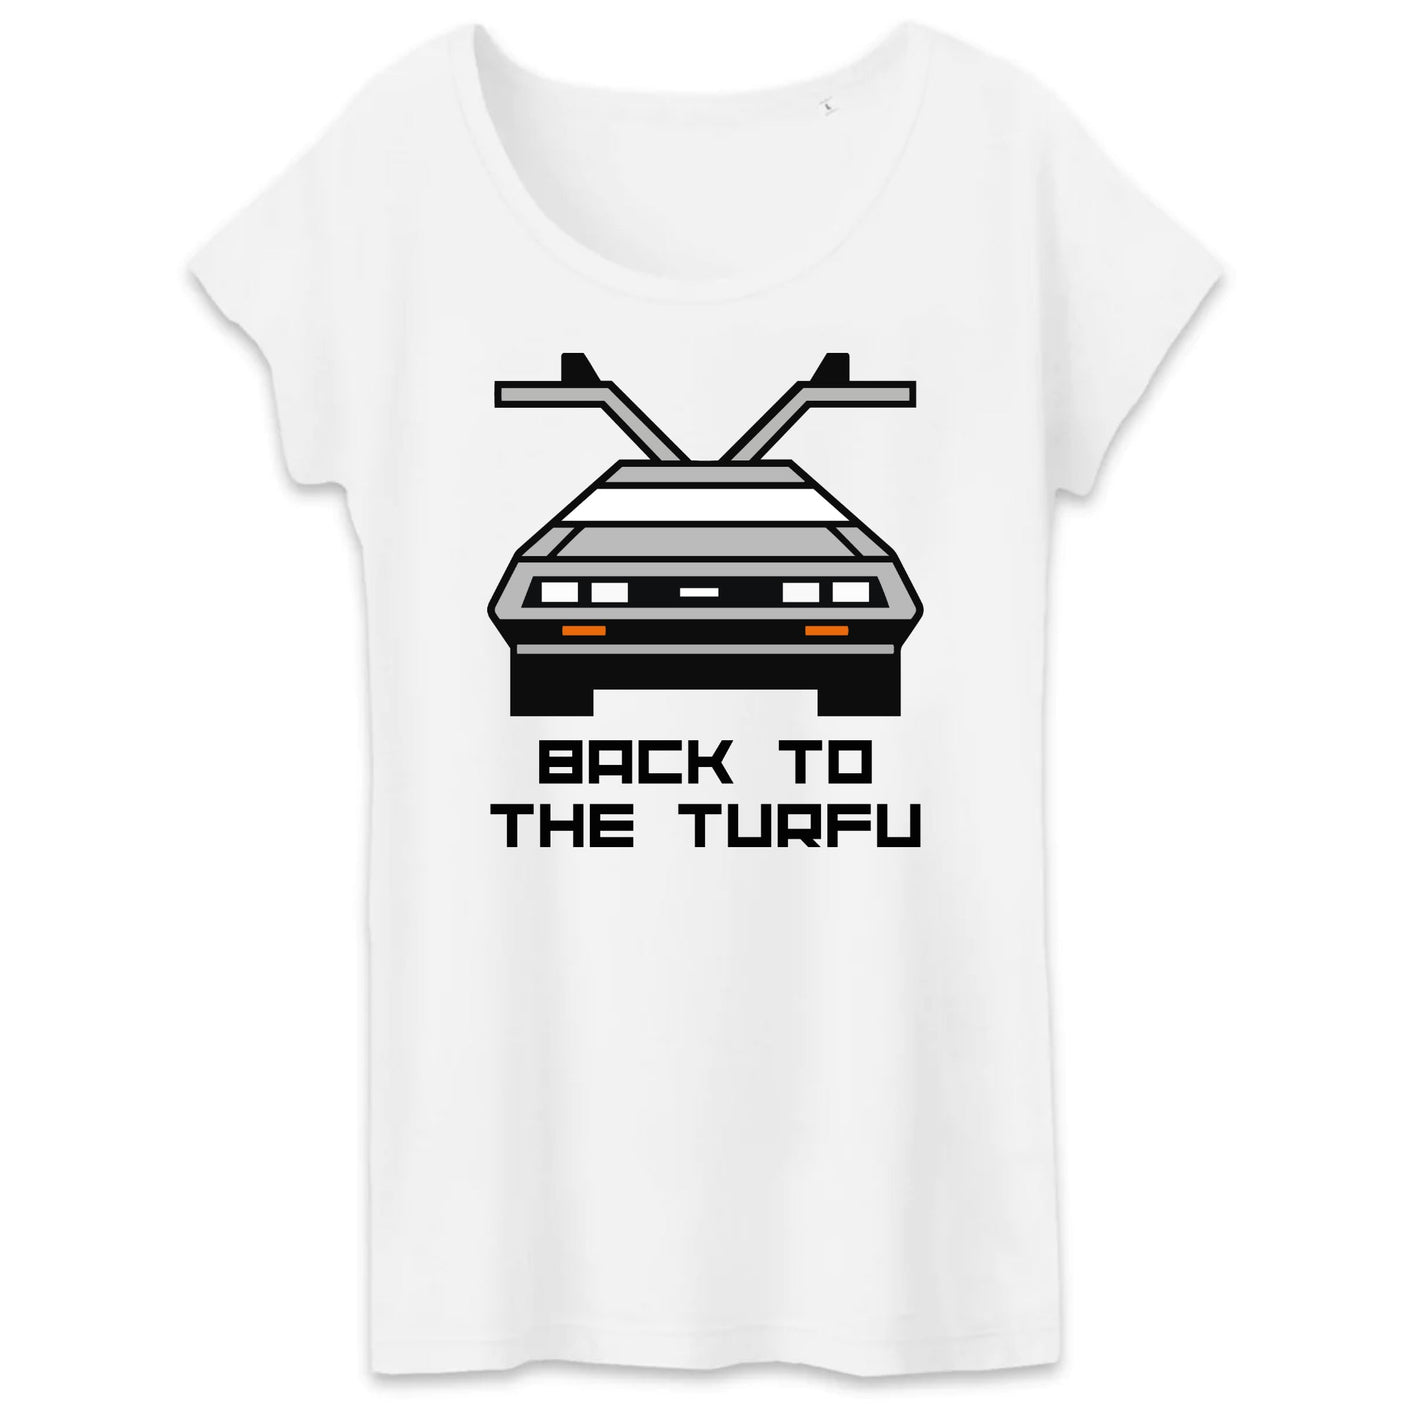 T-Shirt Femme Back to the turfu 